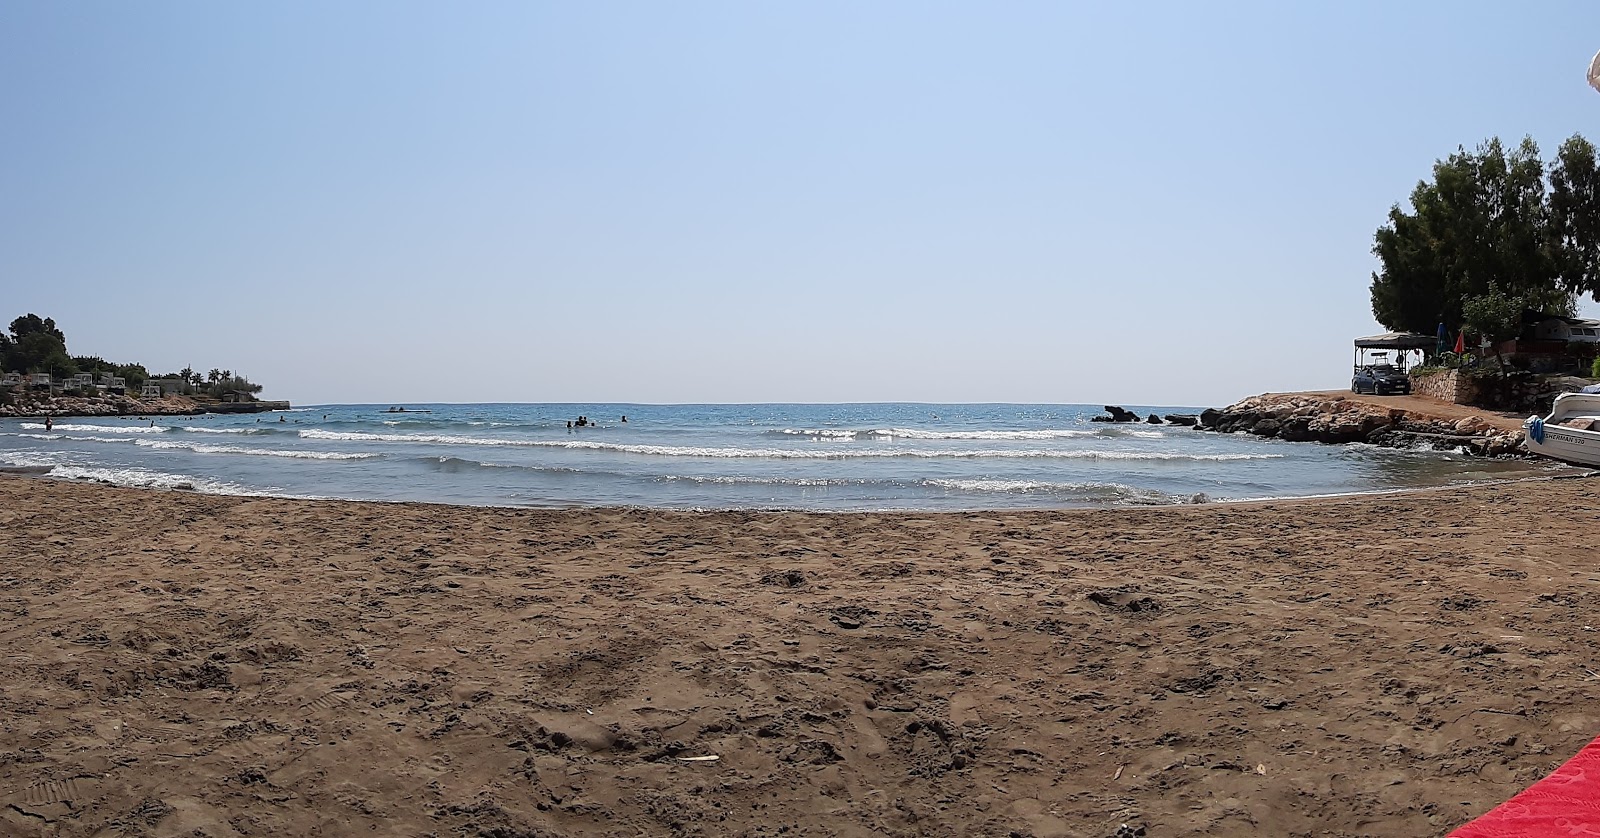 Foto van Queenaba beach met hoog niveau van netheid